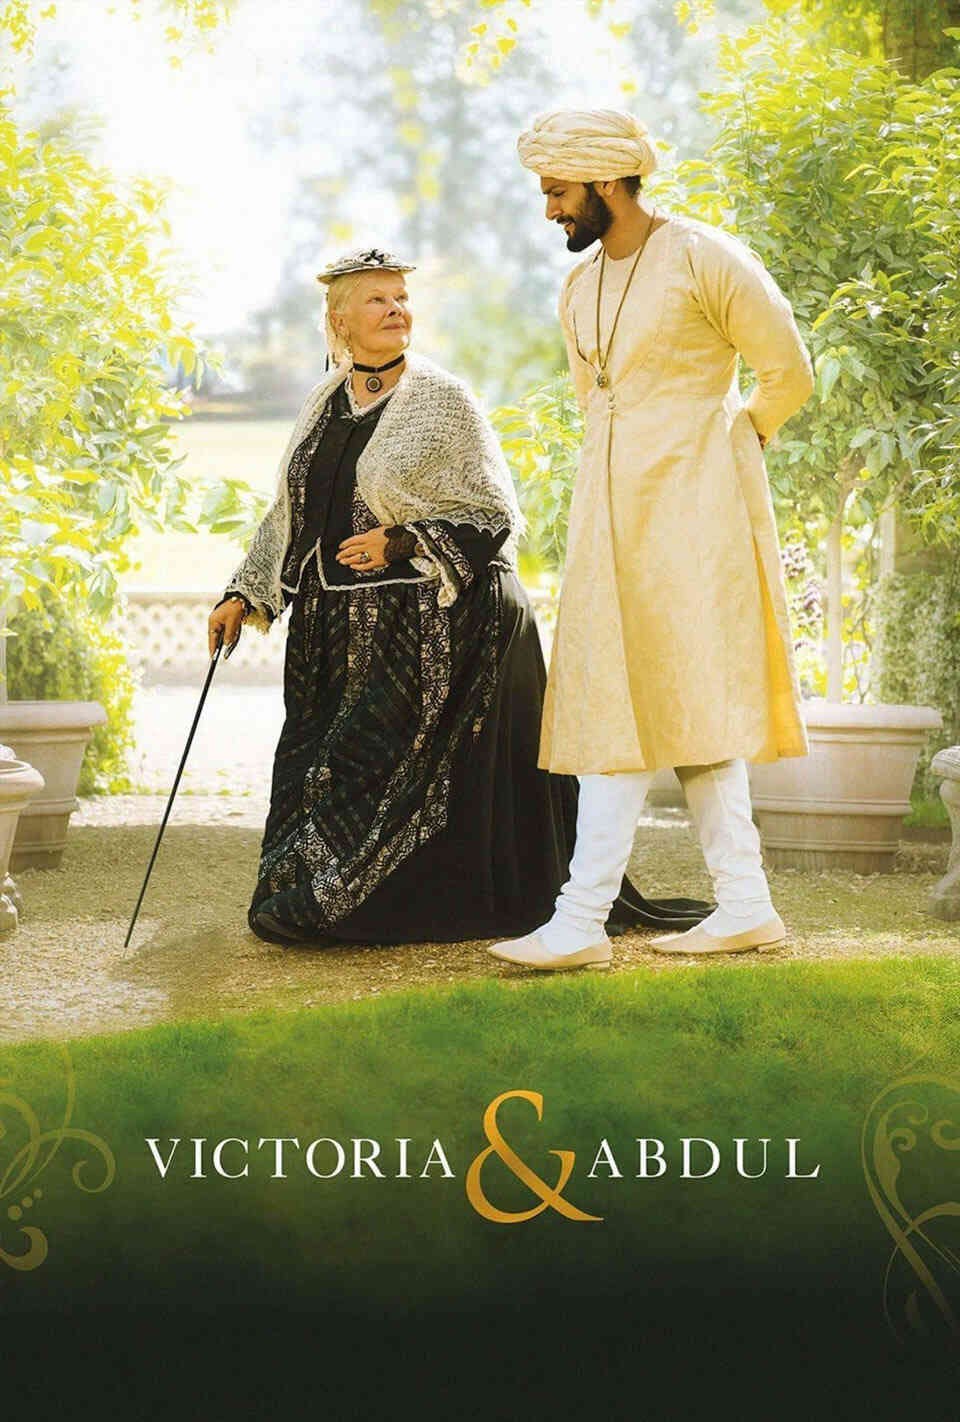 Read Victoria & Abdul screenplay.